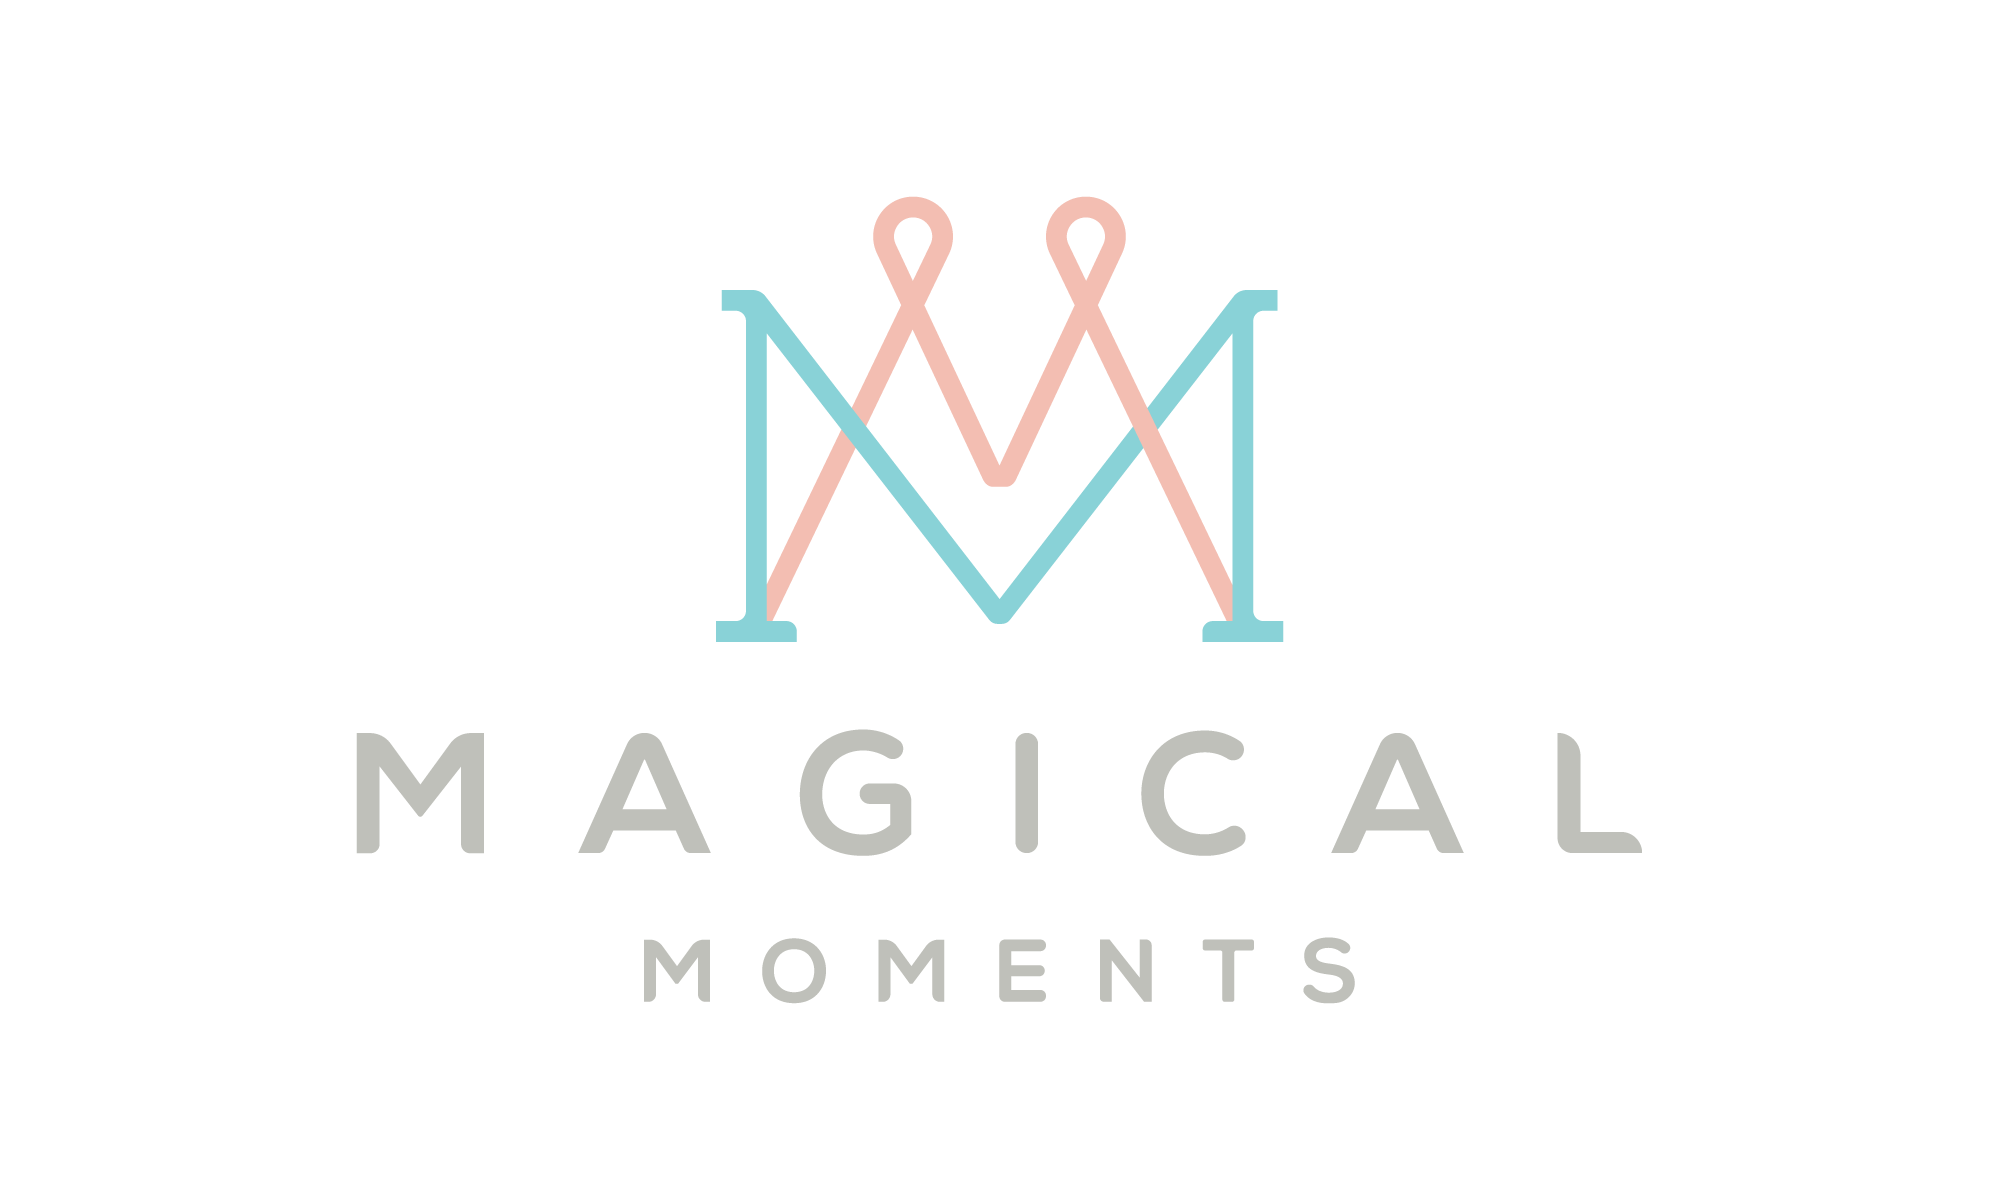 Magical Moments